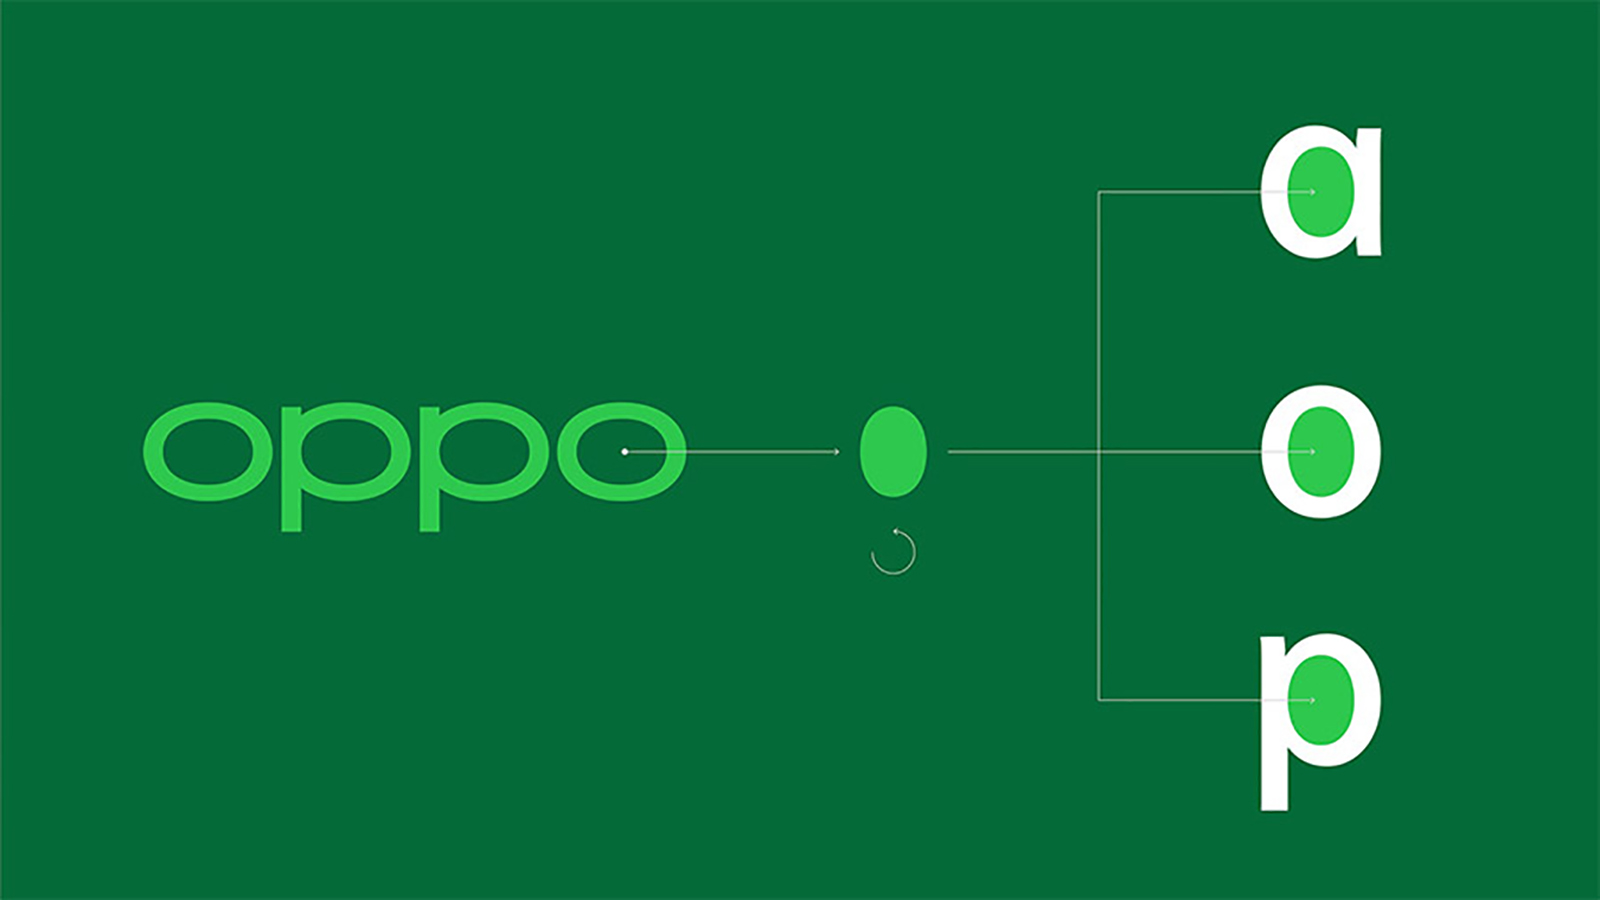 OPPO手机logo图片素材免费下载 - 觅知网